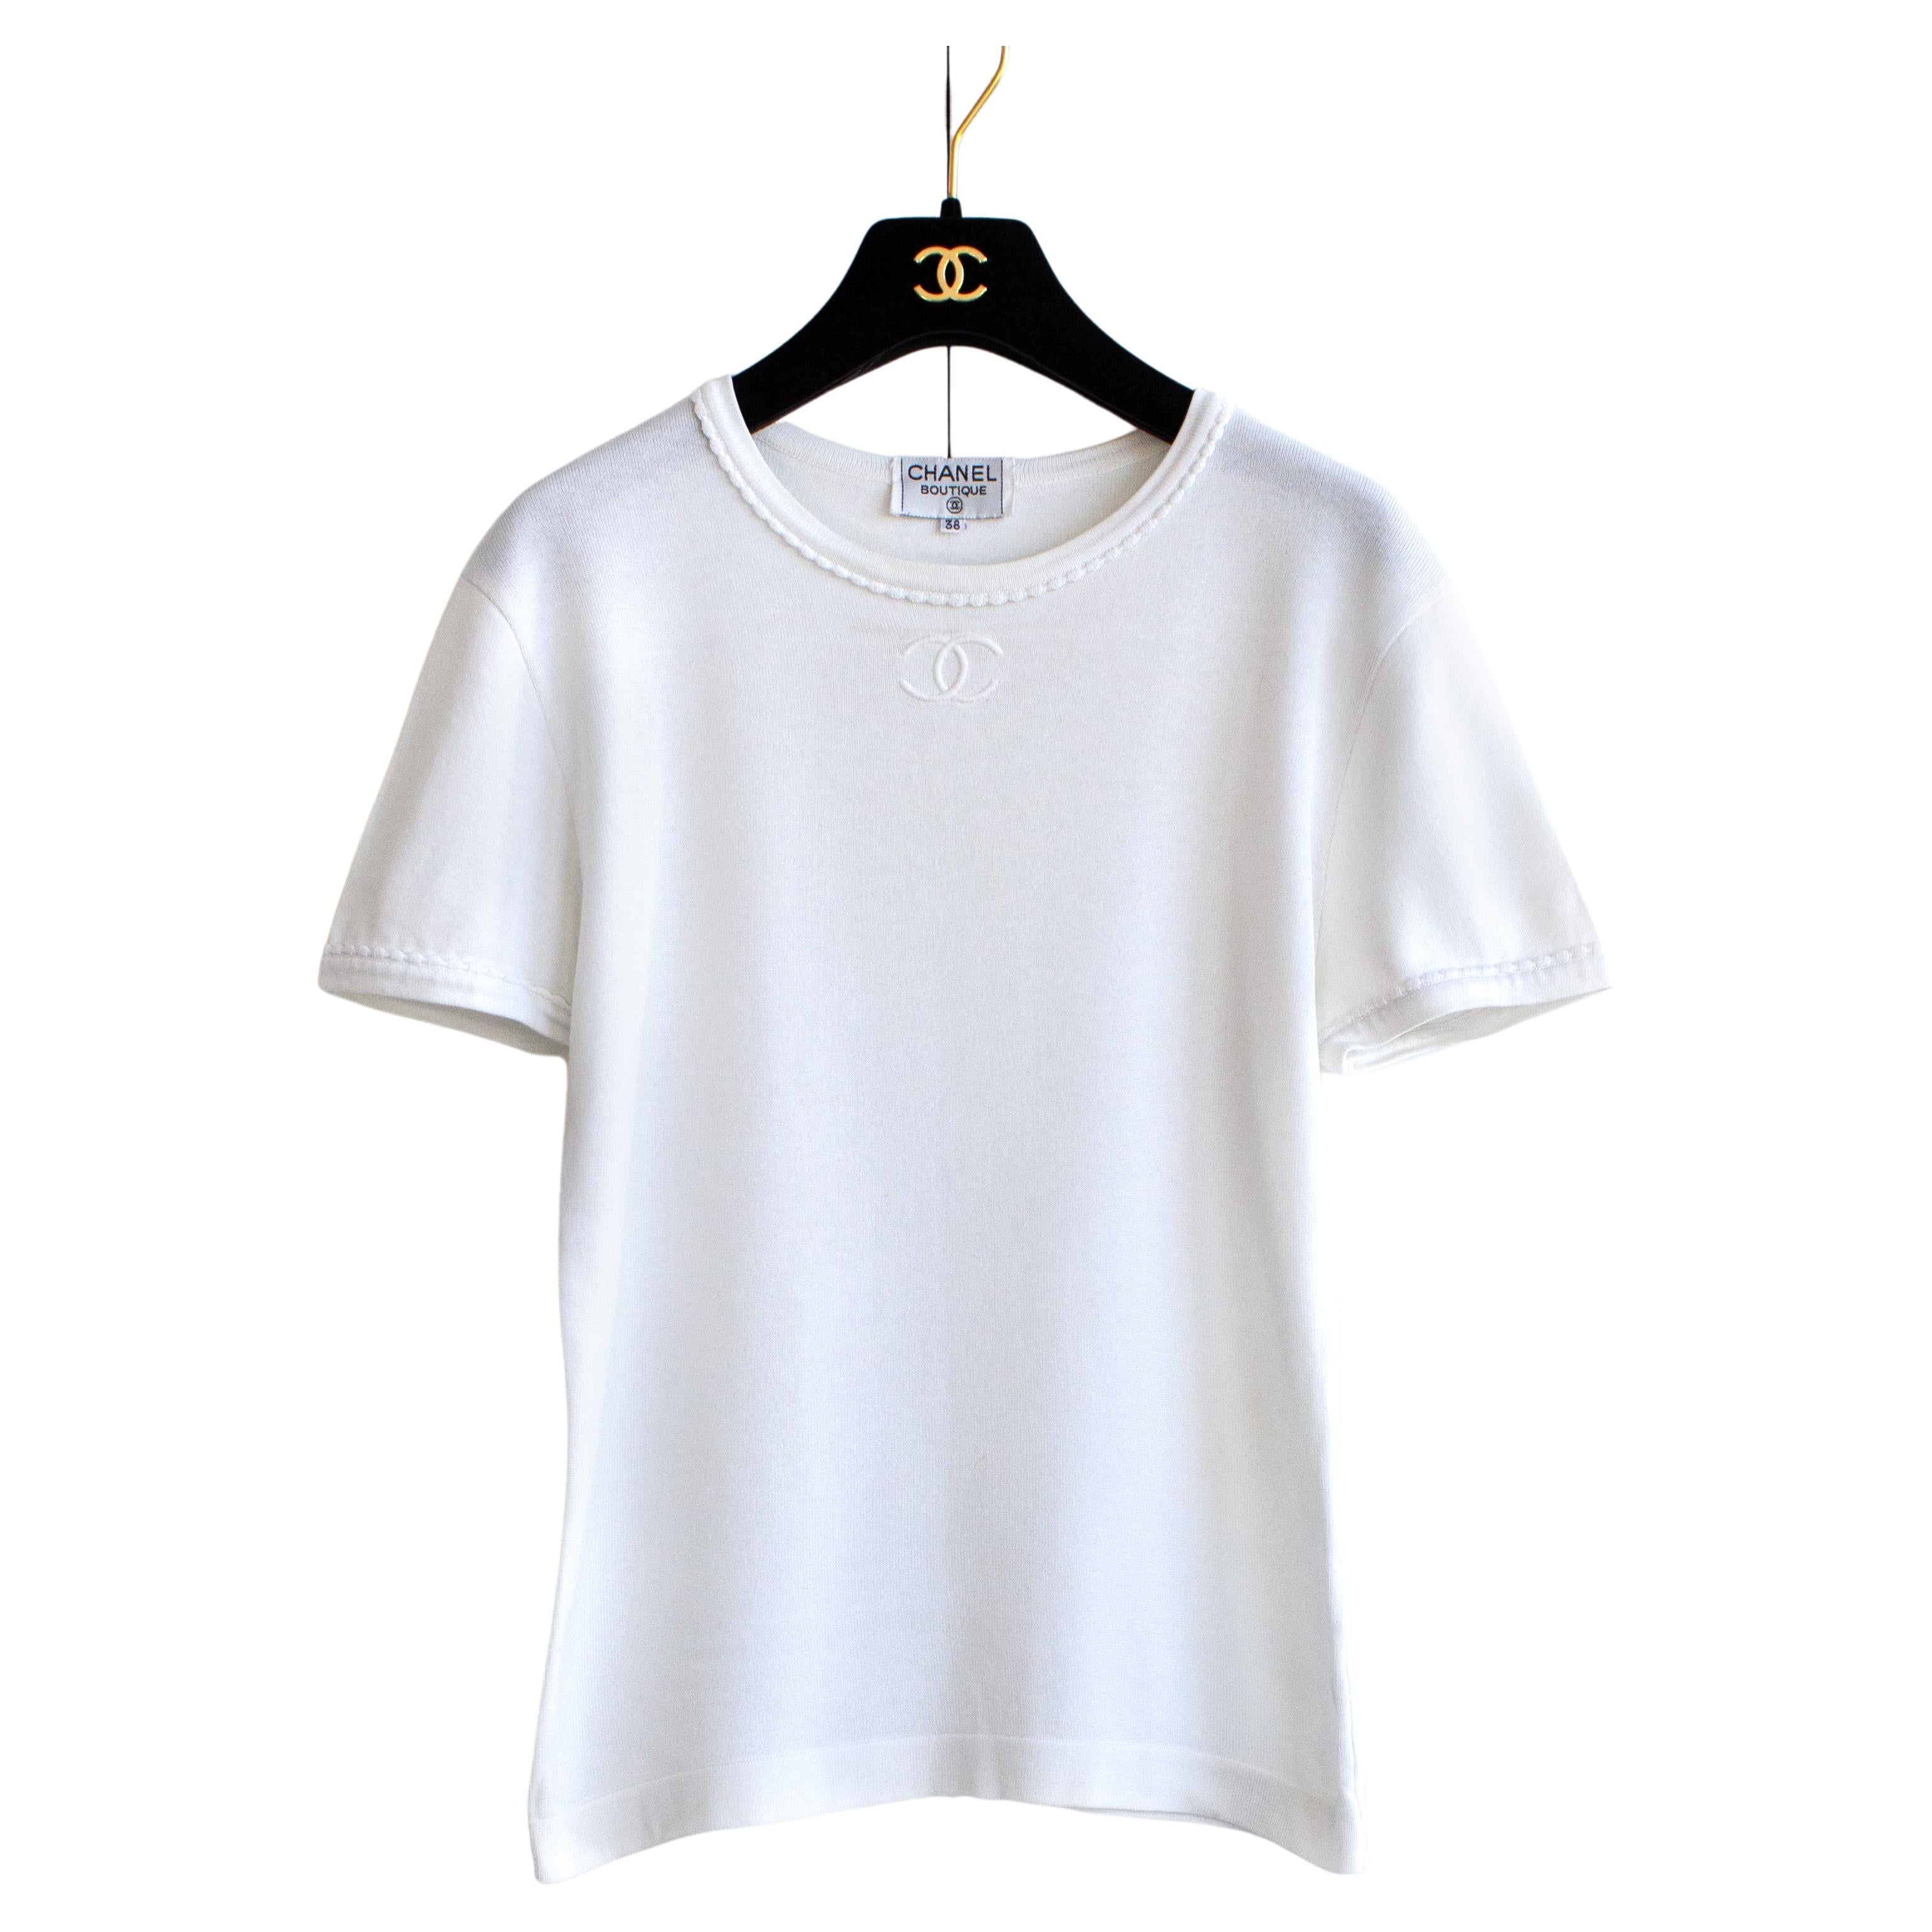 Chanel Logo T Shirt - 29 For Sale on 1stDibs